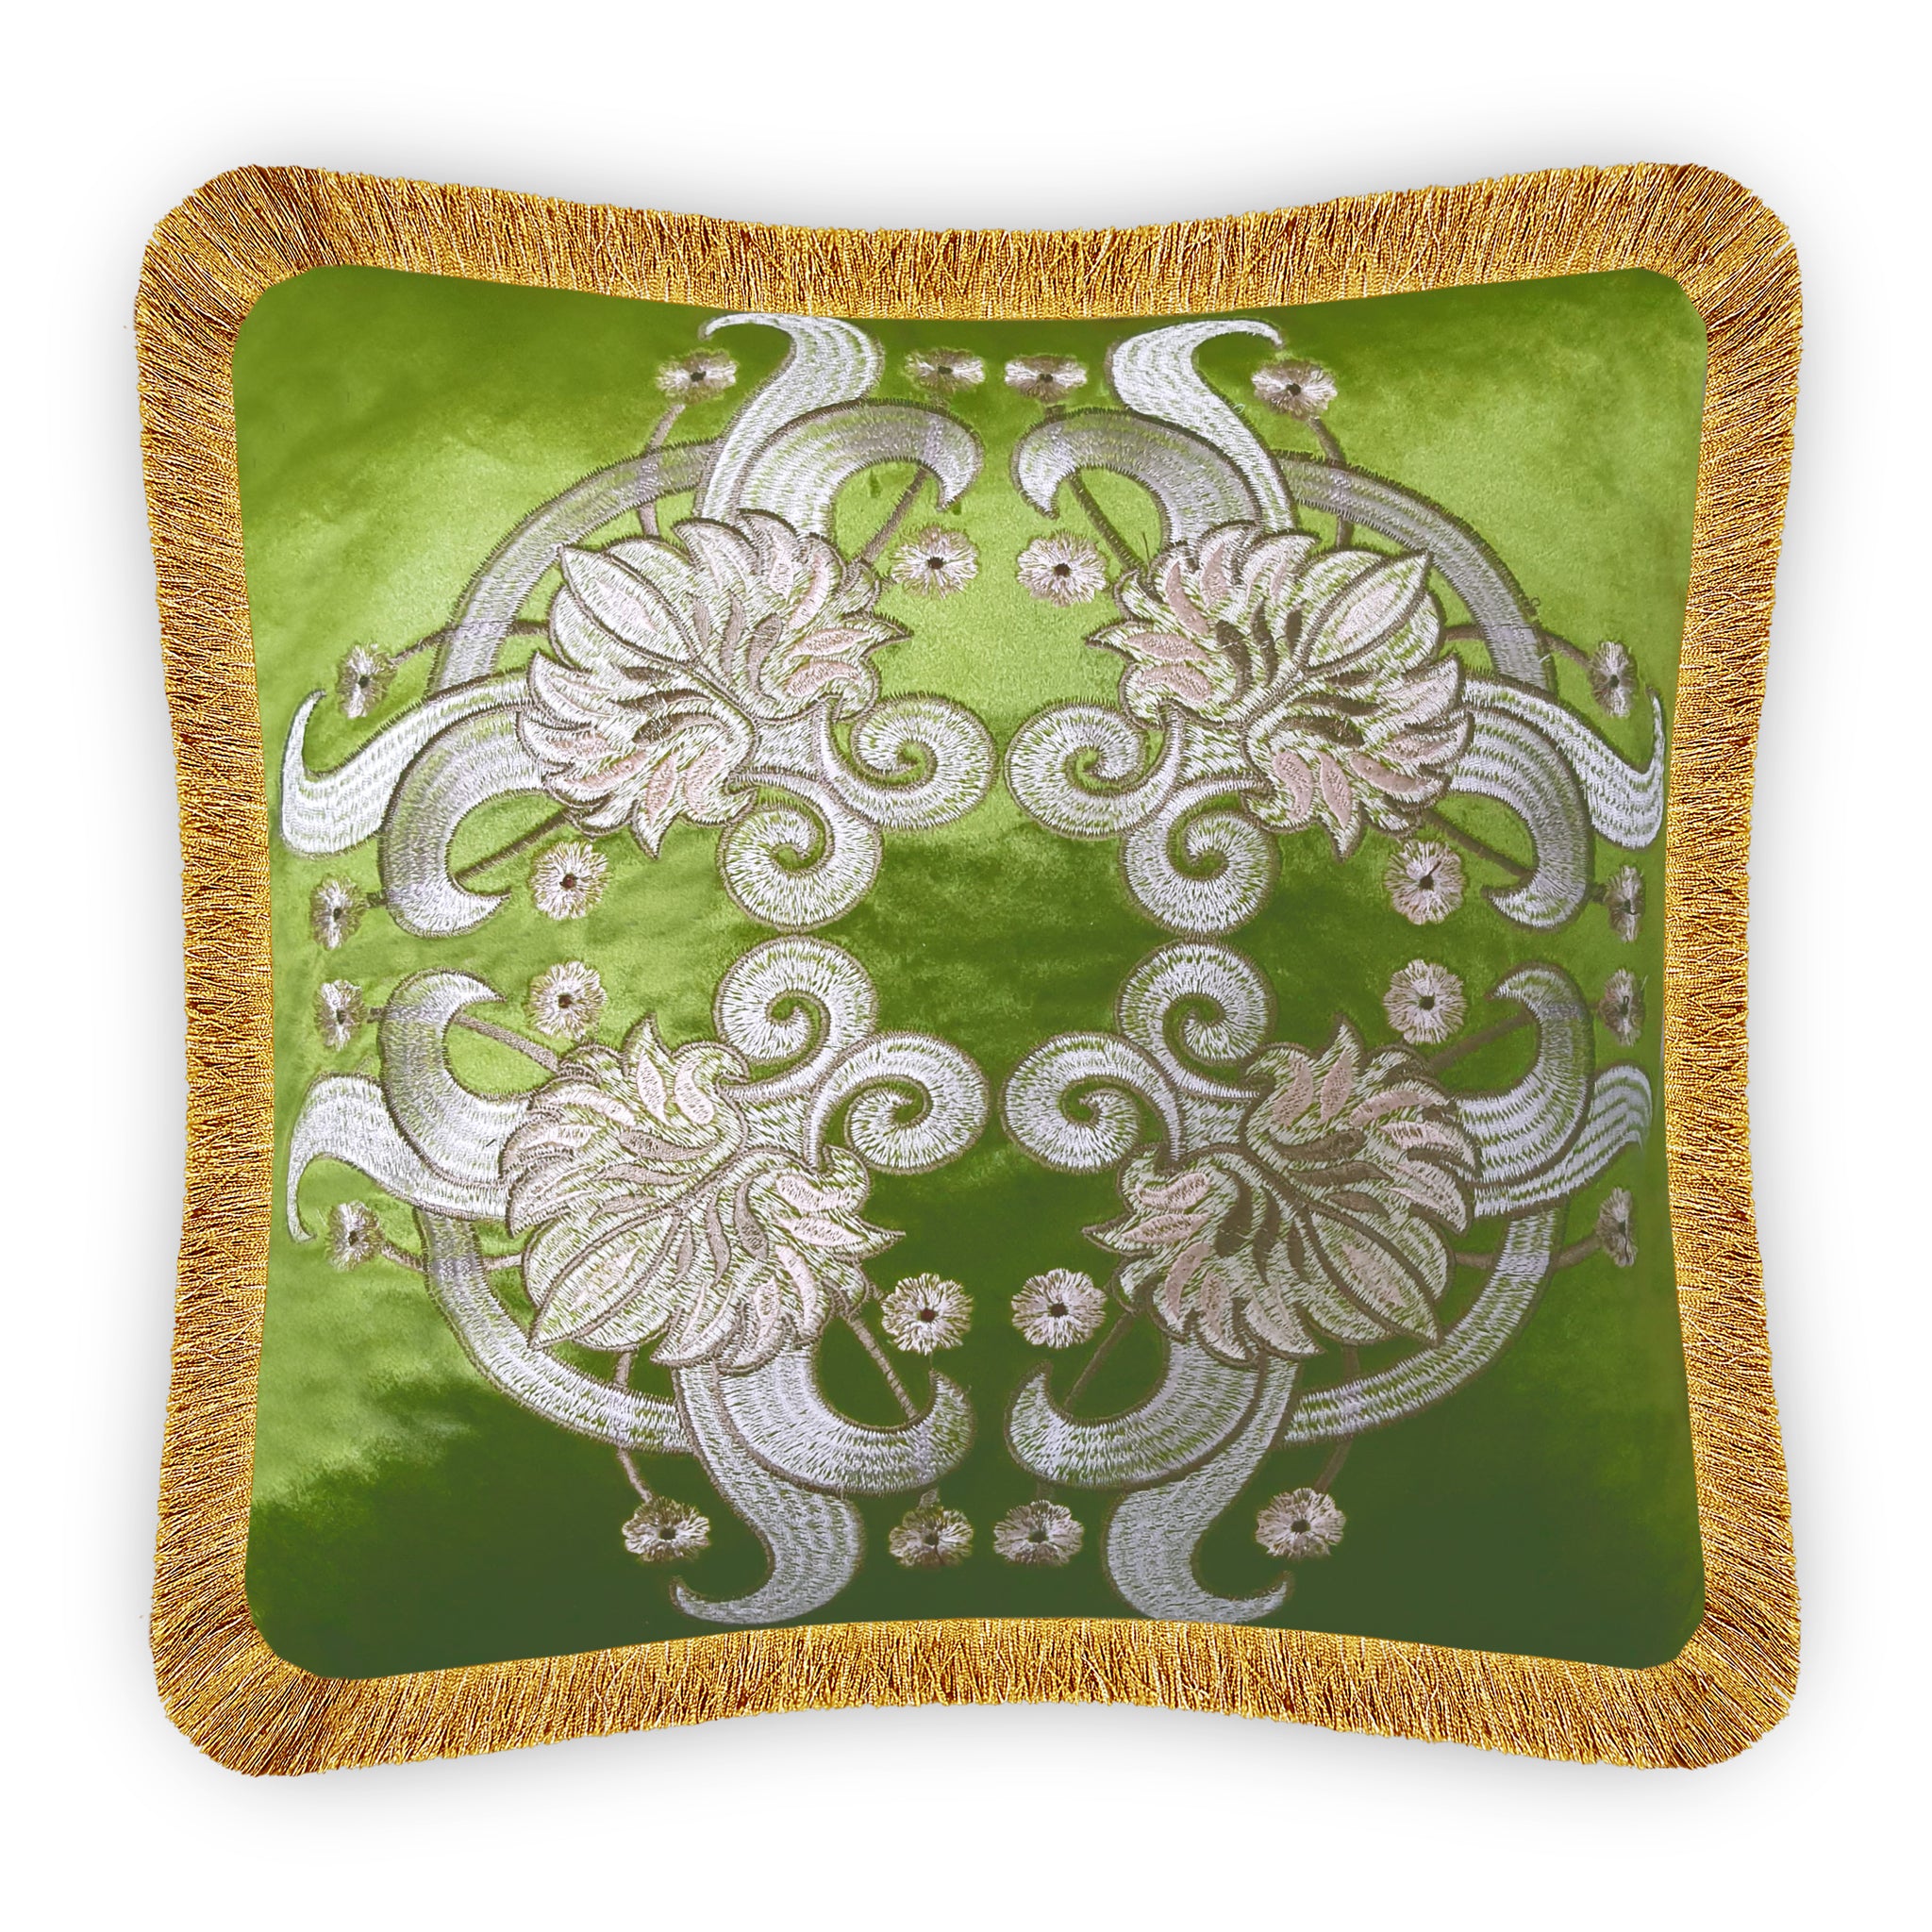 Vellato European Cushion Cover, Velvet Home Decorative Pillow Case, Embroidery Baroque Style Pillowcase 45x45 cm 18x18 Inch